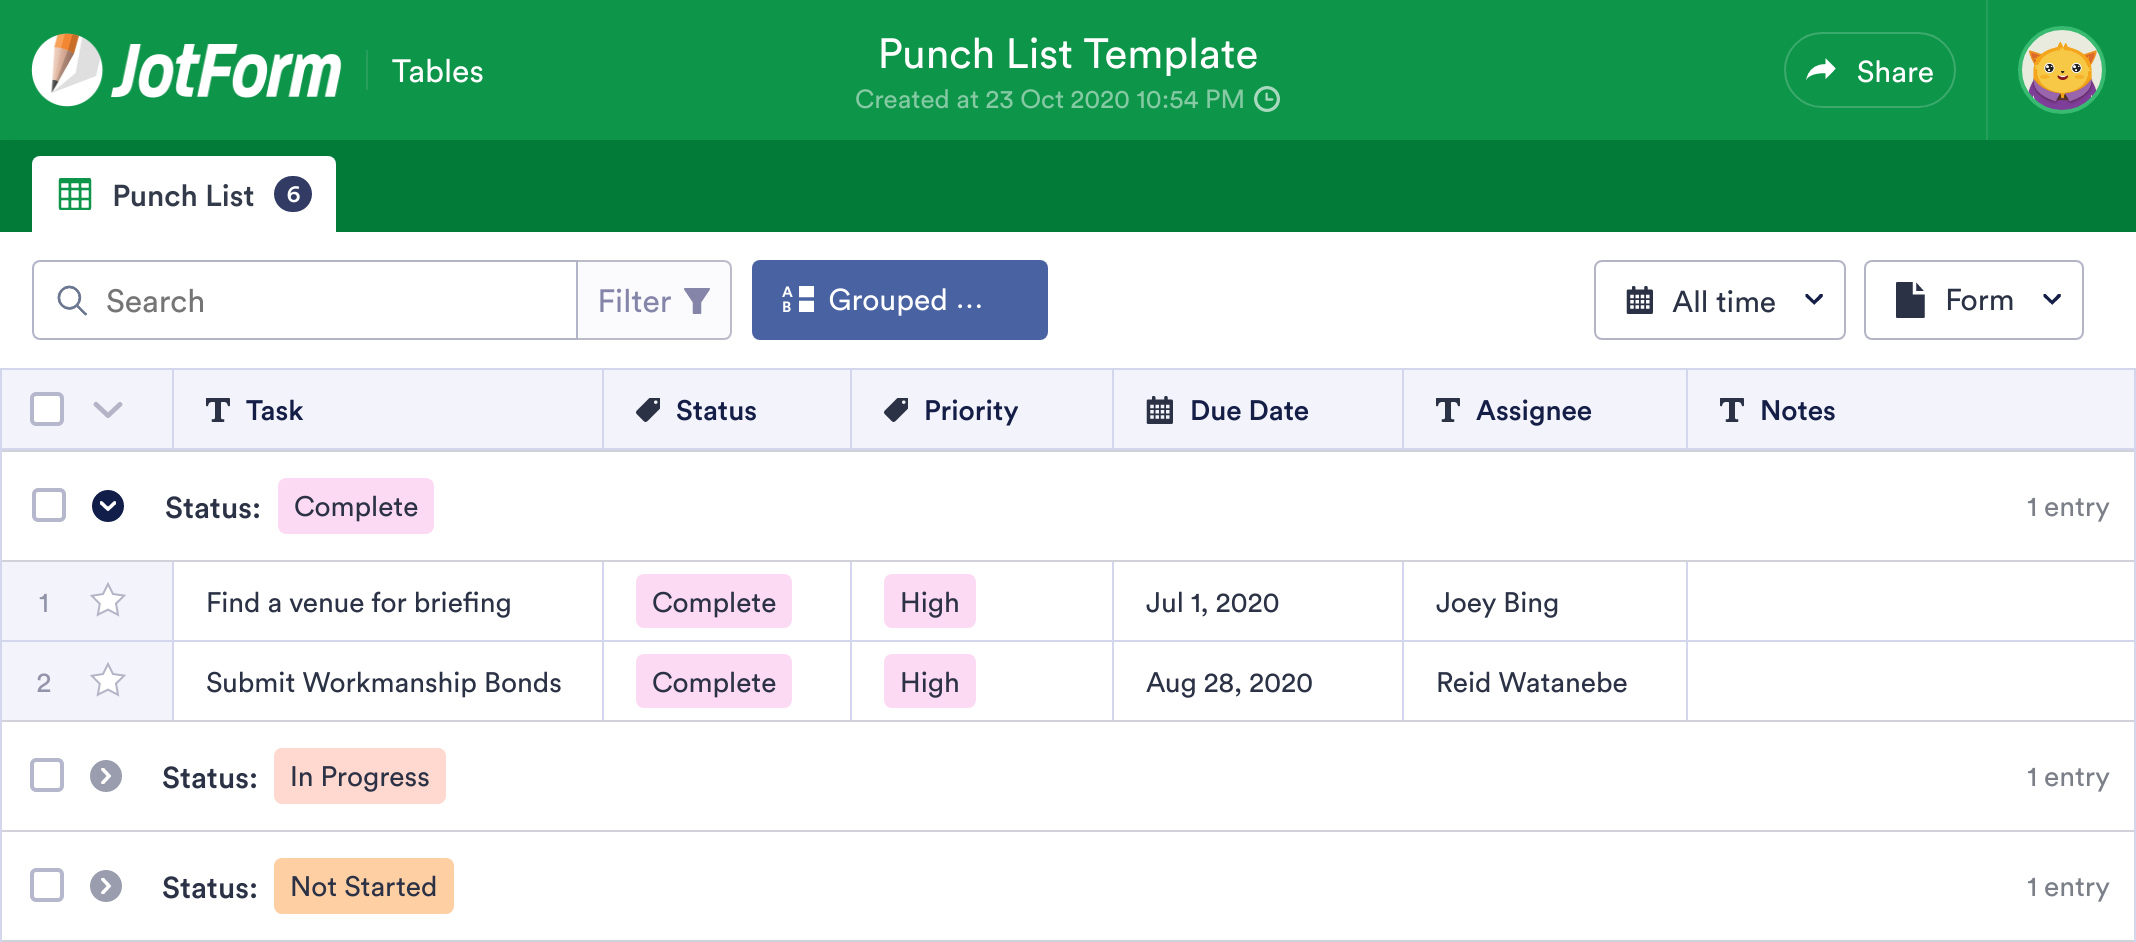 Punch List Template | JotForm Tables